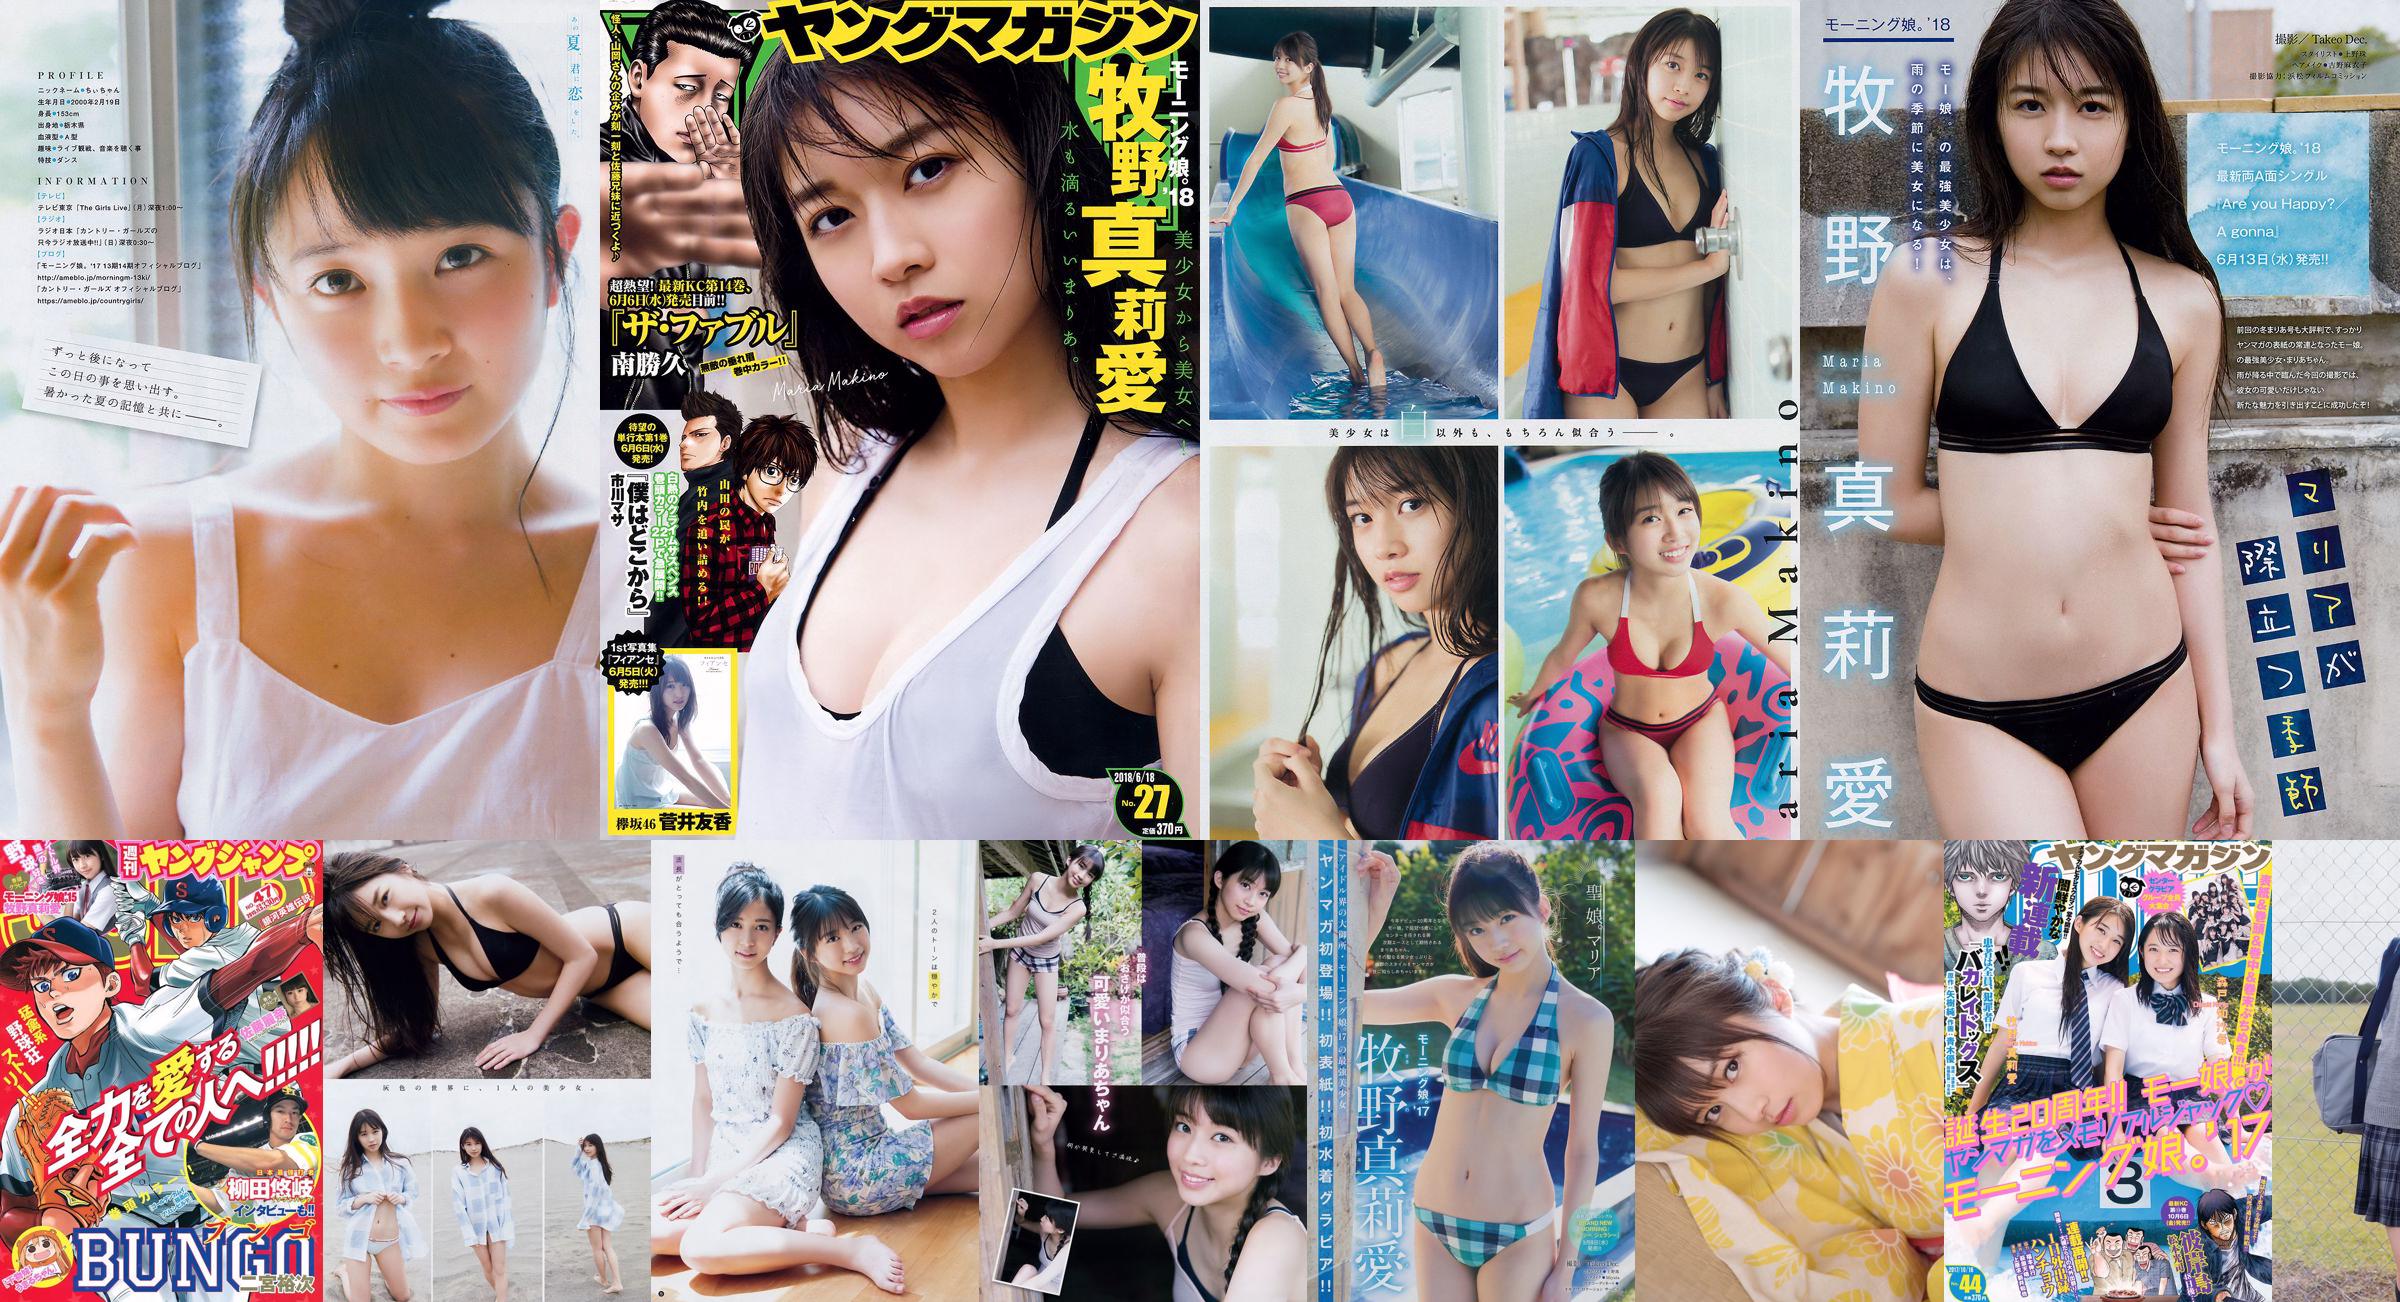 [Młody magazyn] Maria Makino Yuka Sugai 2018 nr 27 Zdjęcie No.42403d Strona 1